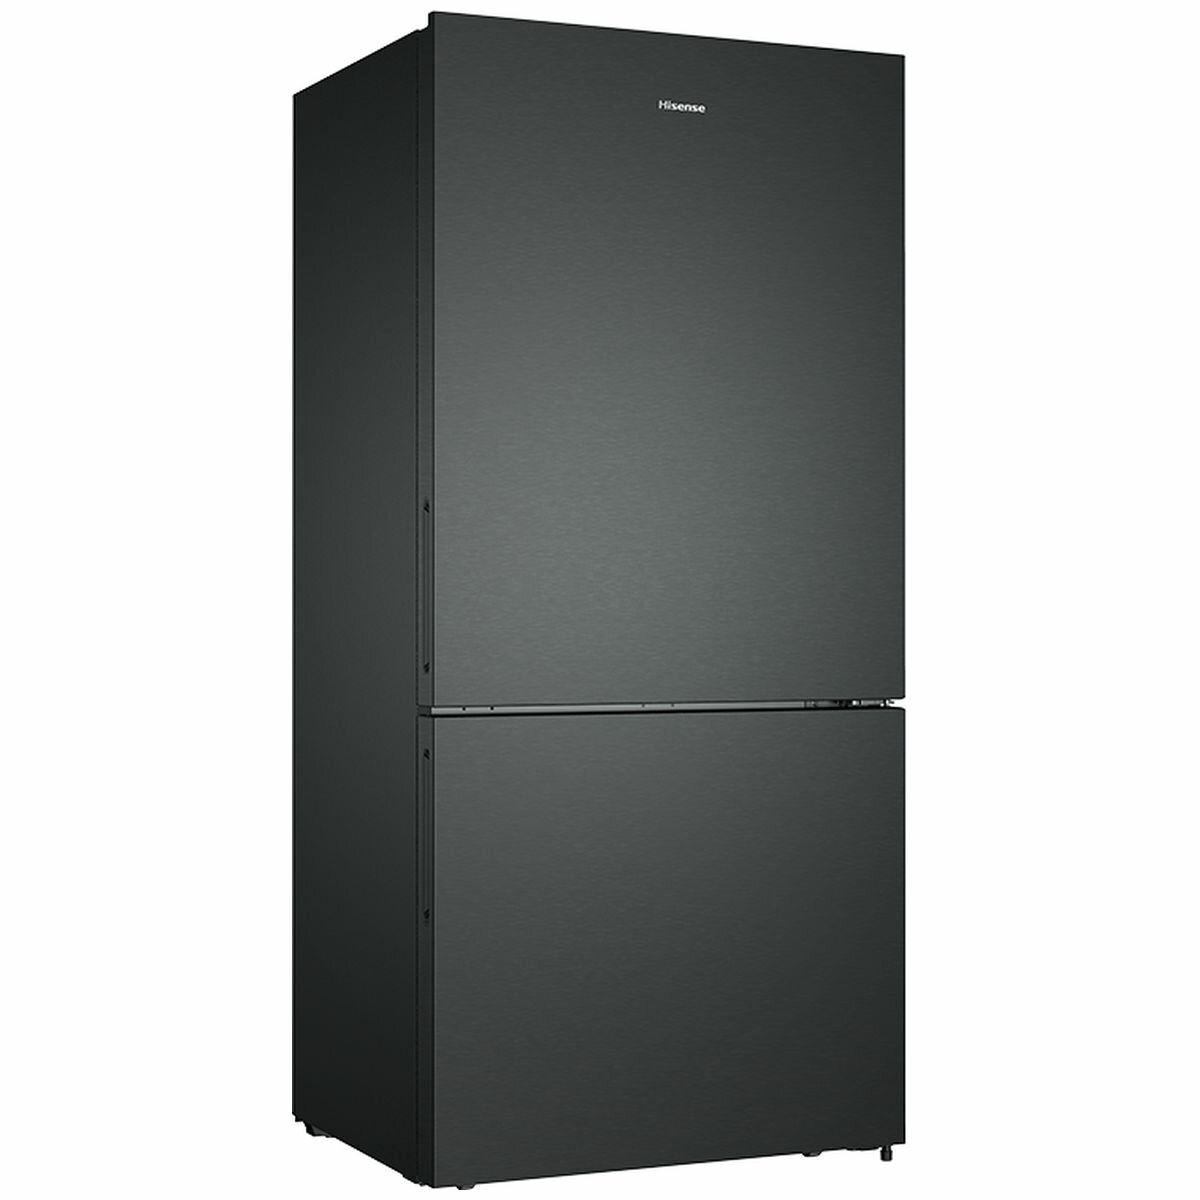 hisense-483l-pureflat-bottom-mount-refrigerator-hrbm483b-2-197861b5-high (1)